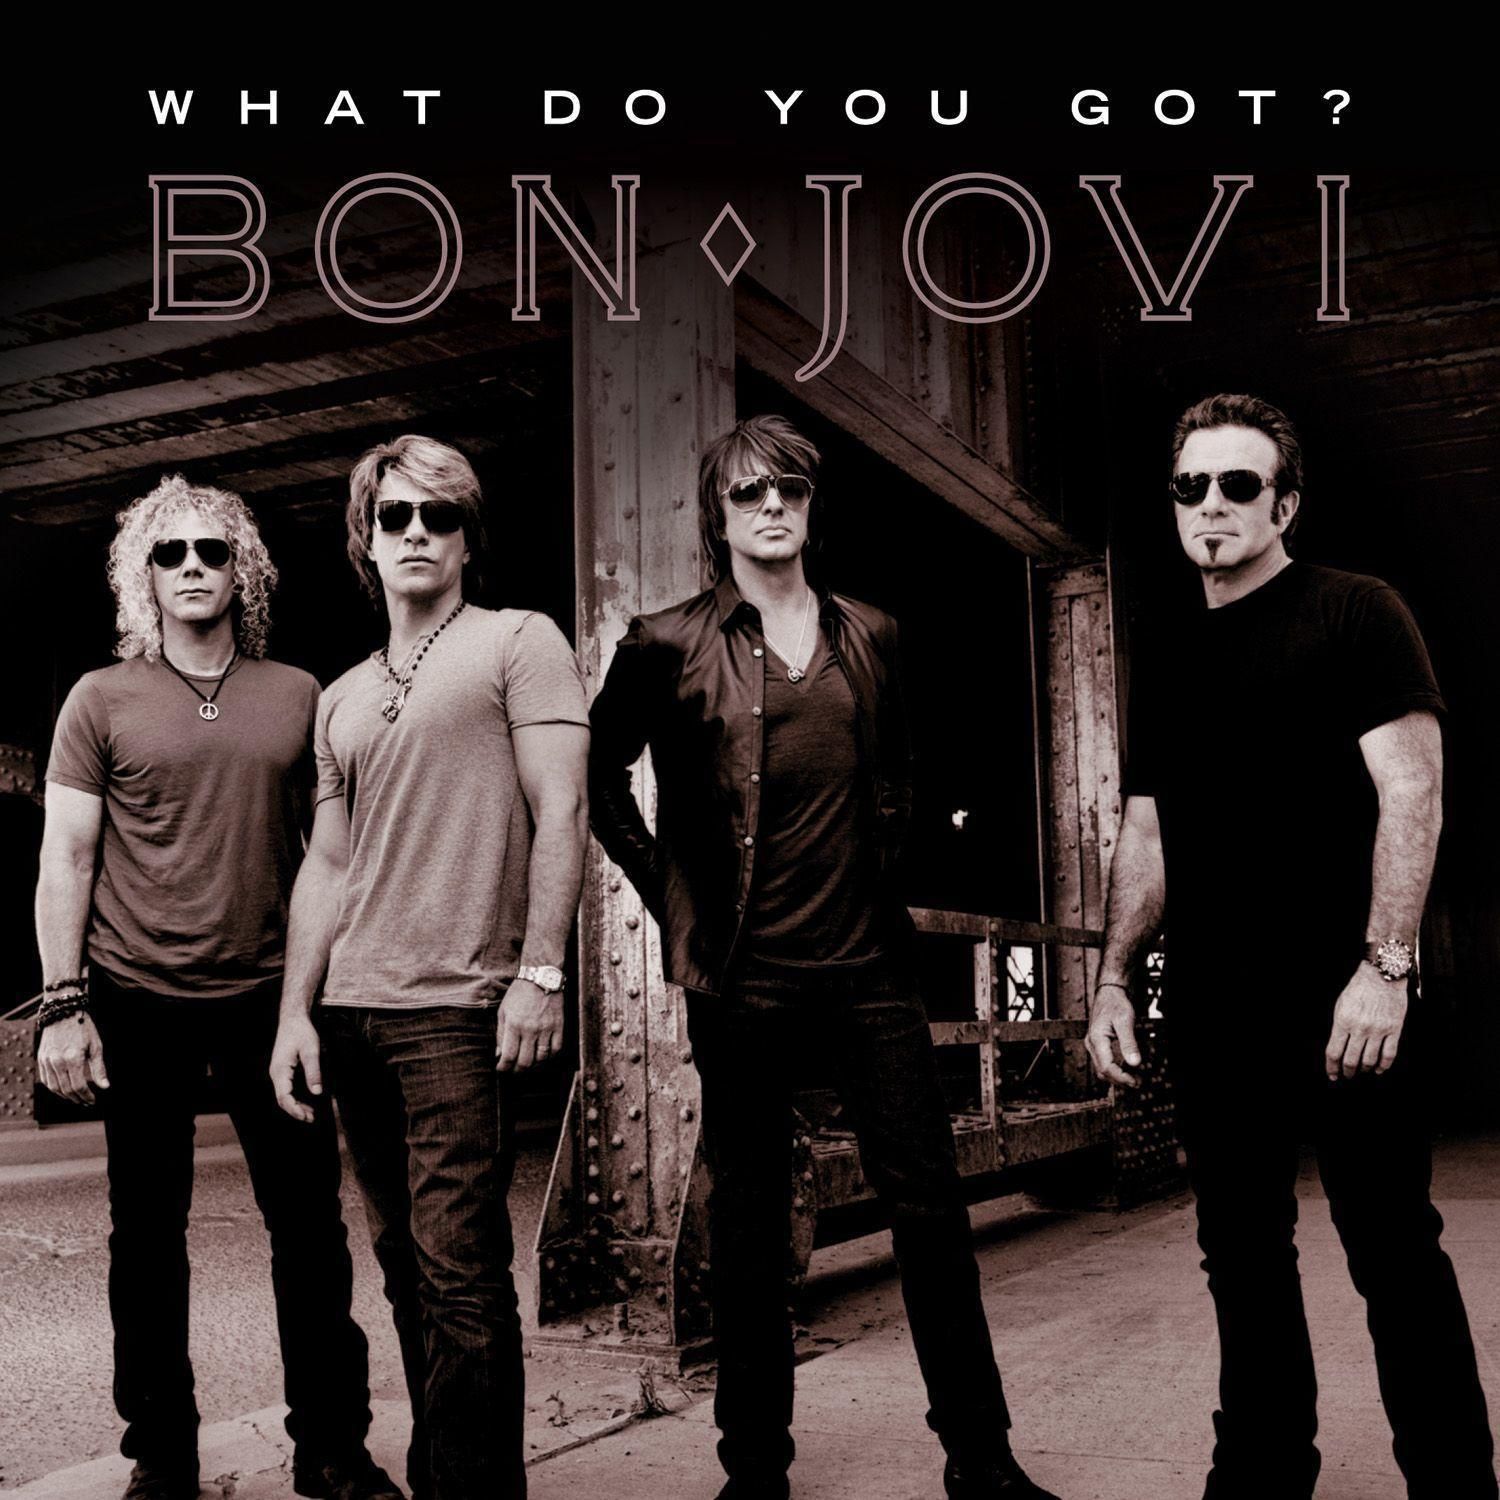 Bon Jovi Wallpapers